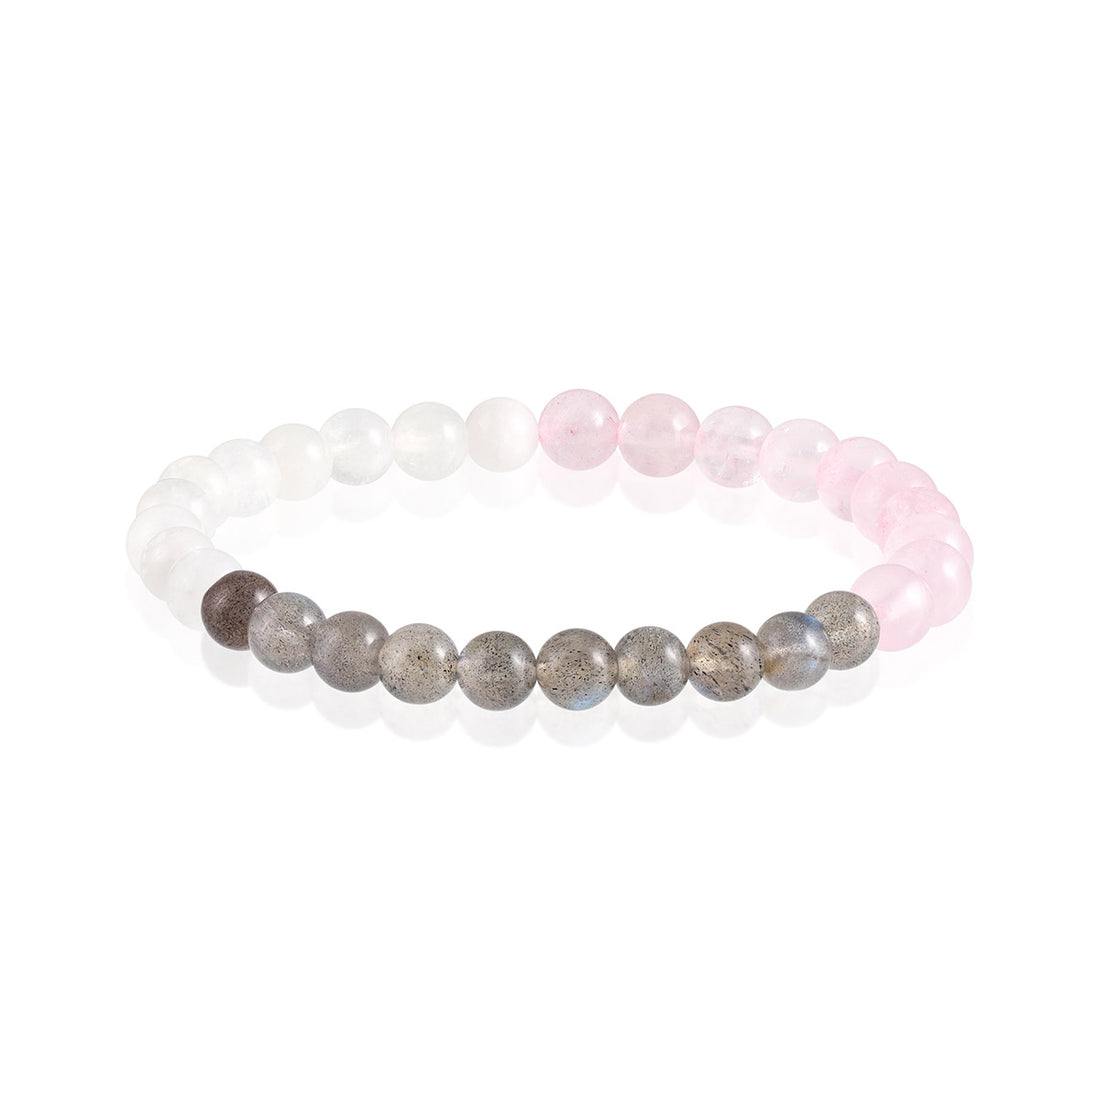 Hormonal Balance Bracelet - Moonstone, Labradorite, Rose Quartz - 6mm Beads